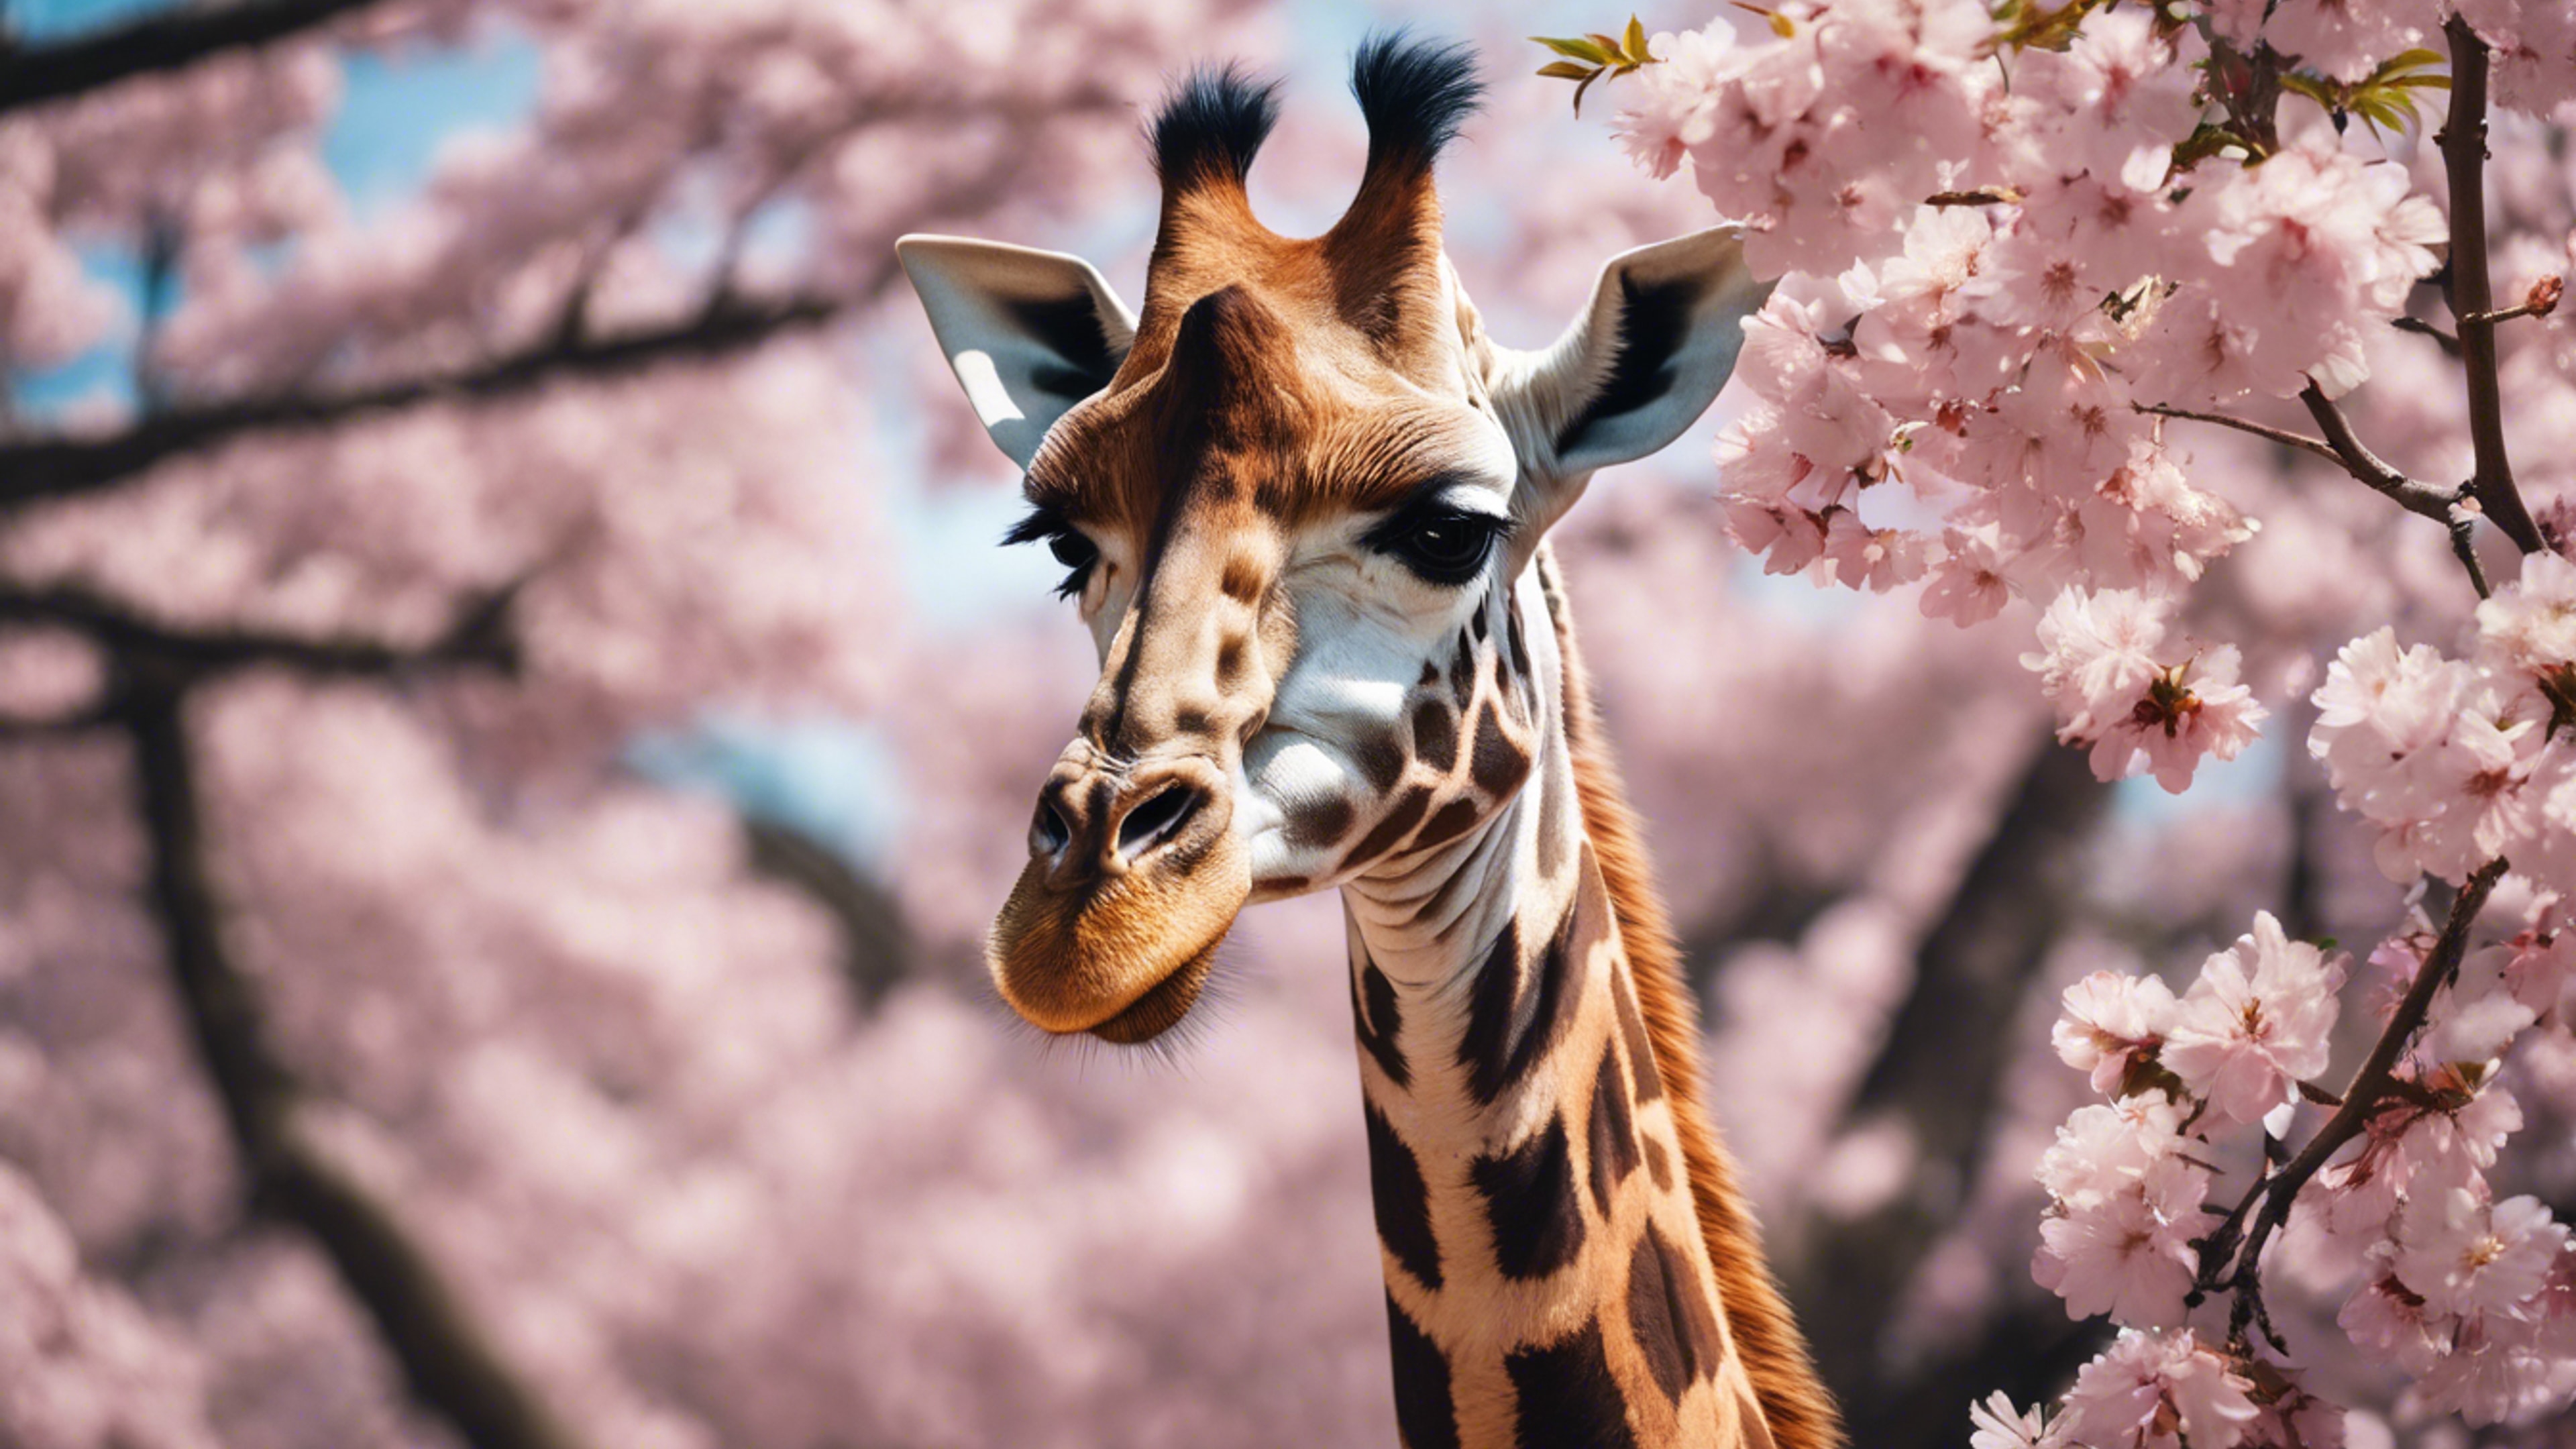 A giraffe hiding playfully behind a cherry blossom tree in full bloom. Sfondo[1212acafafba4b4d89bd]